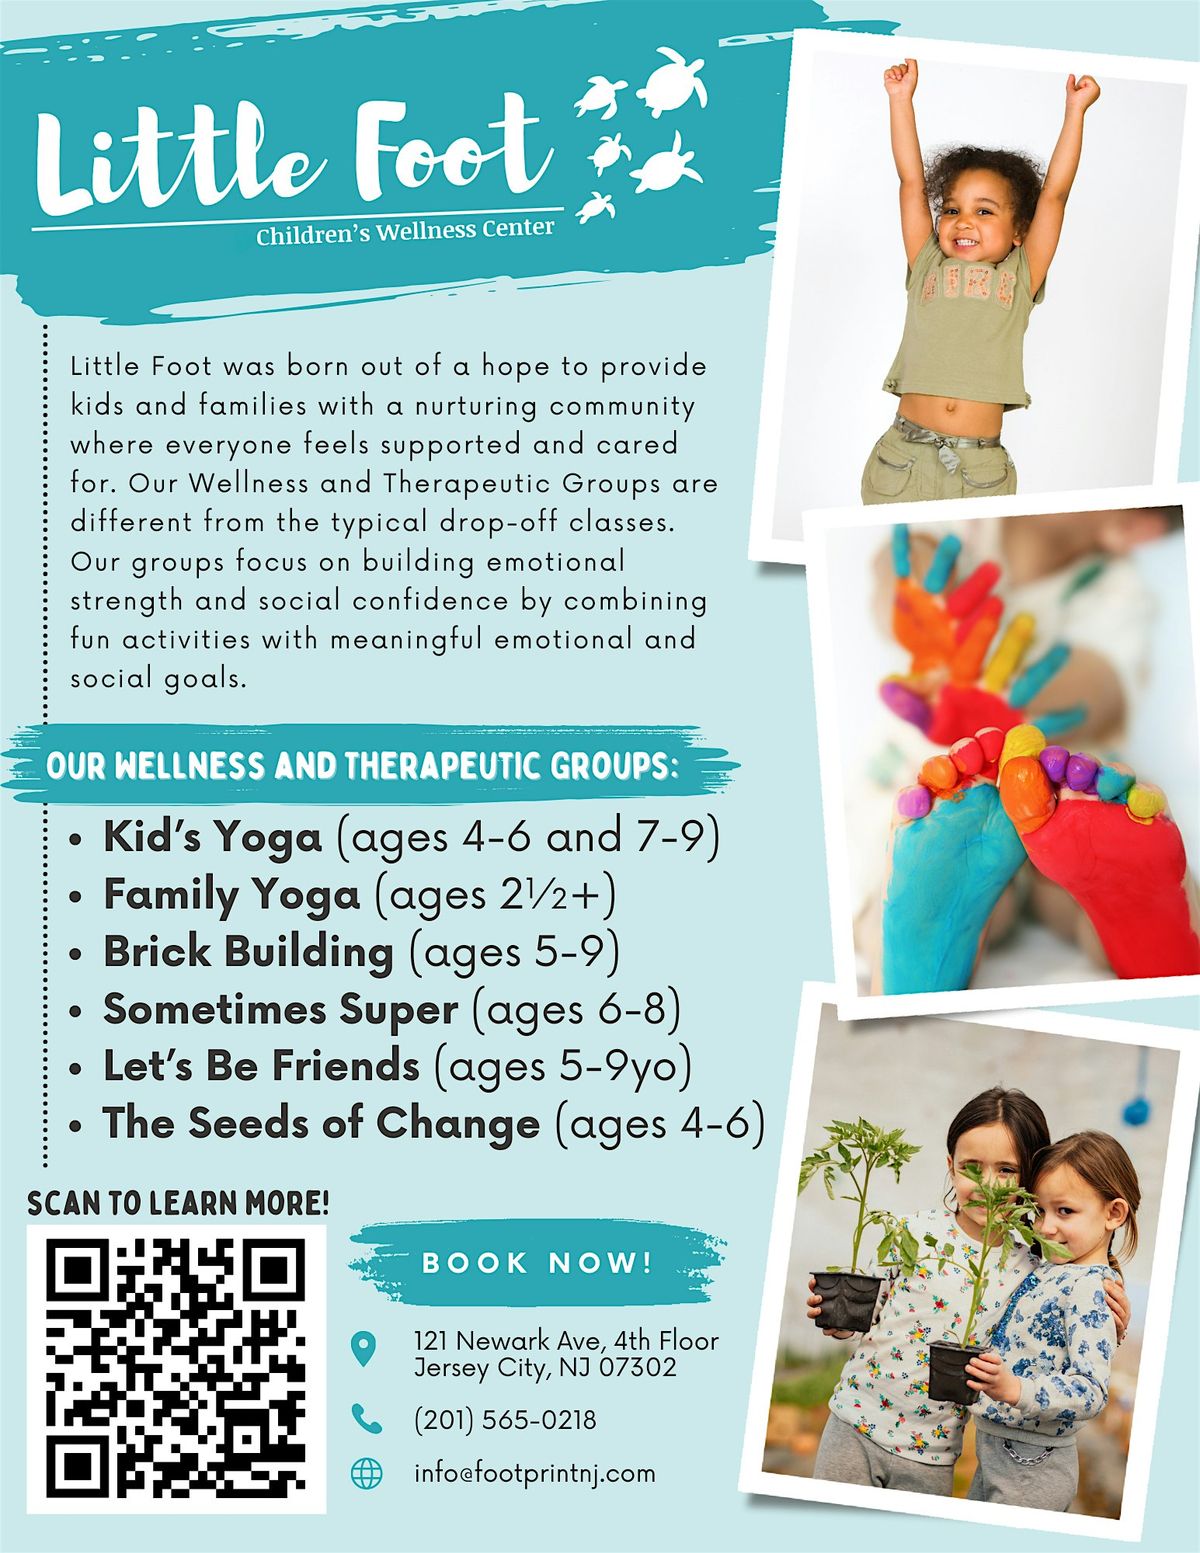 Family Yoga, Brick (lego) building, Friendship Building Groups for Kids!